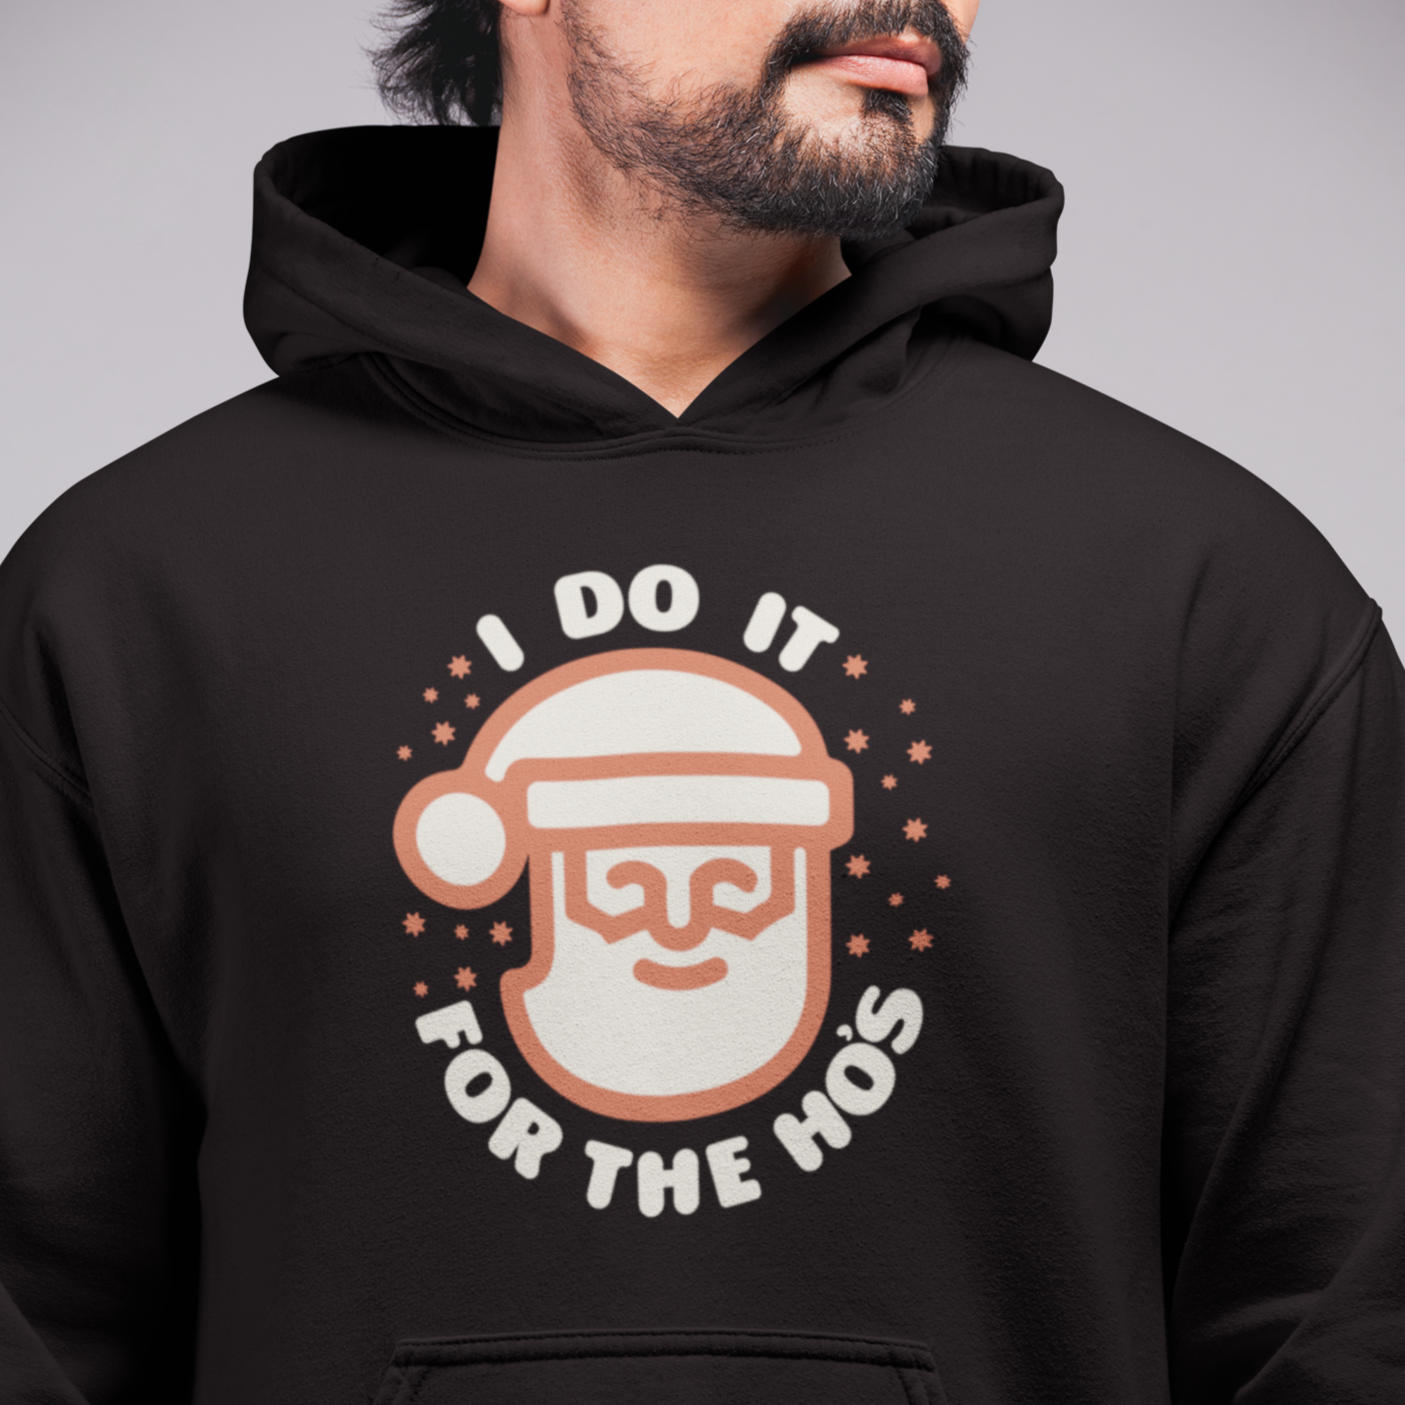 I Do It For The Ho’s - Men's NUBLEND® Hooded Sweatshirt